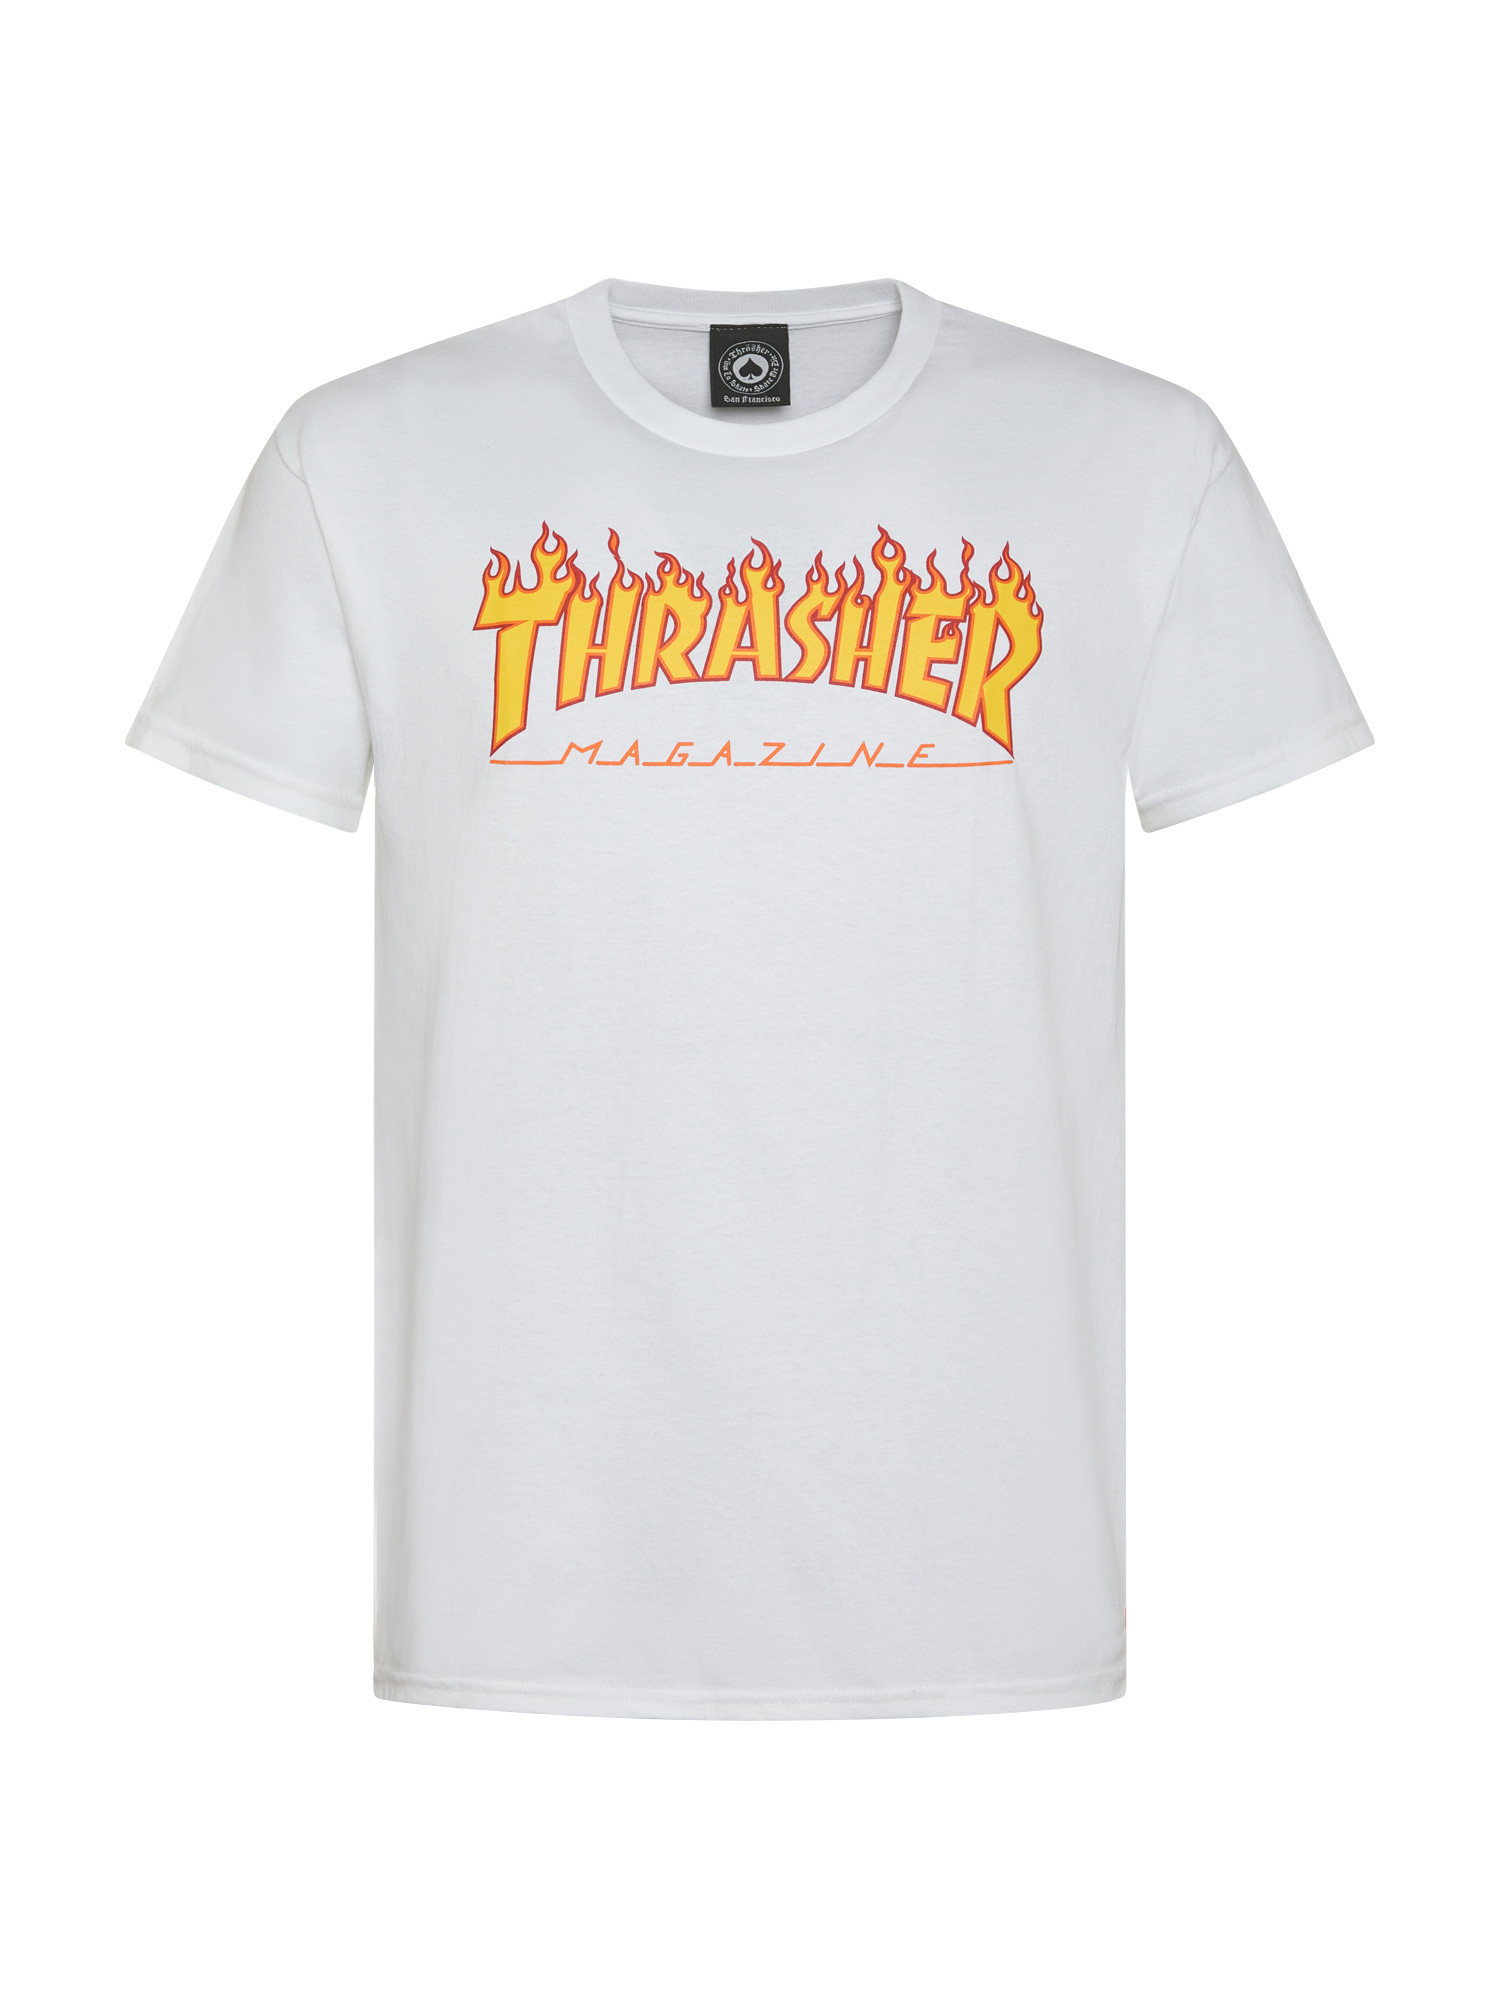 Thrasher - Flames logo T-Shirt, White, large image number 0